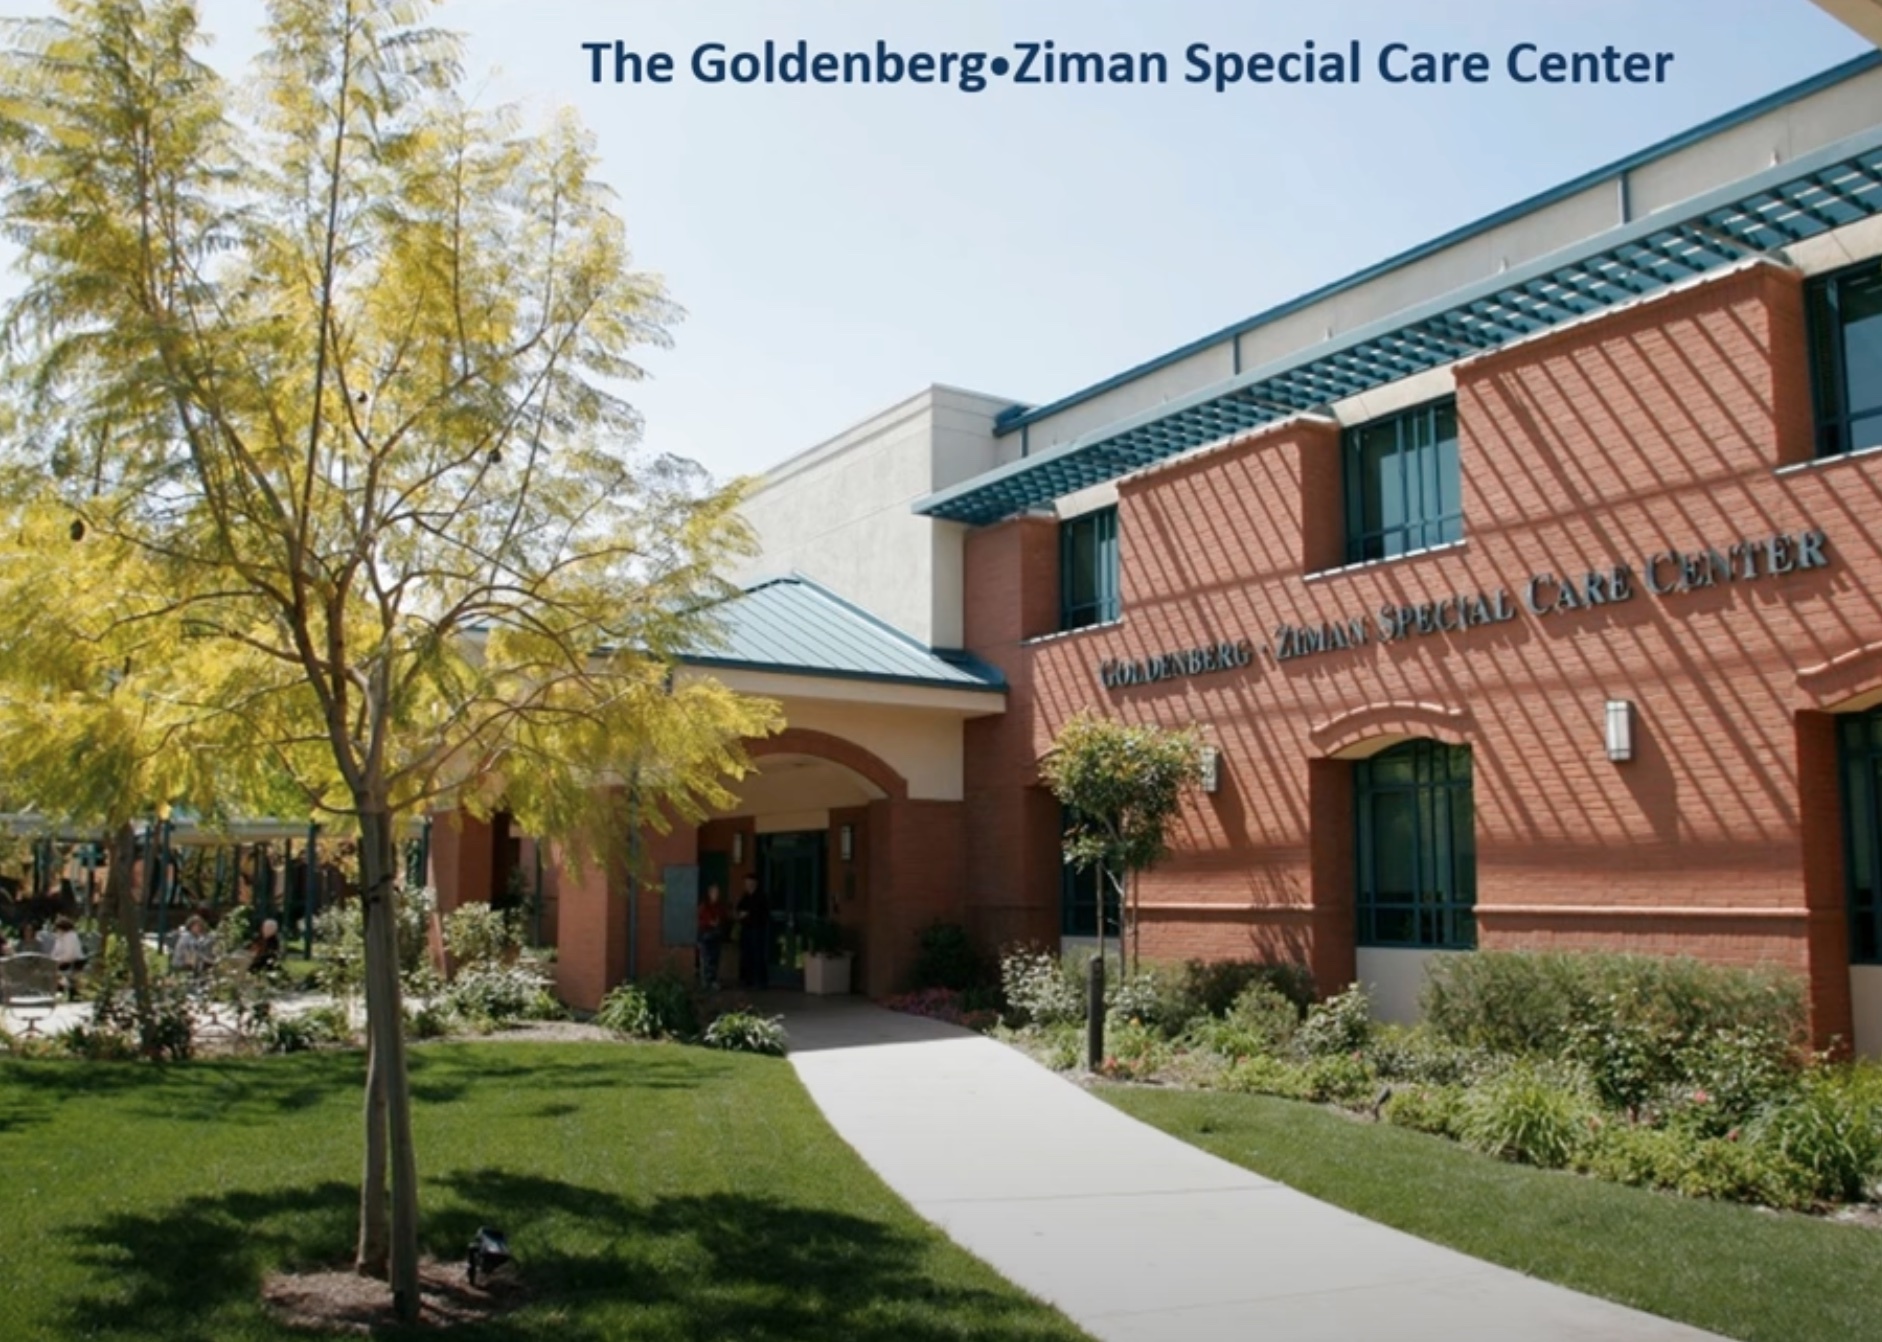 The Goldenberg Ziman Special Care Center